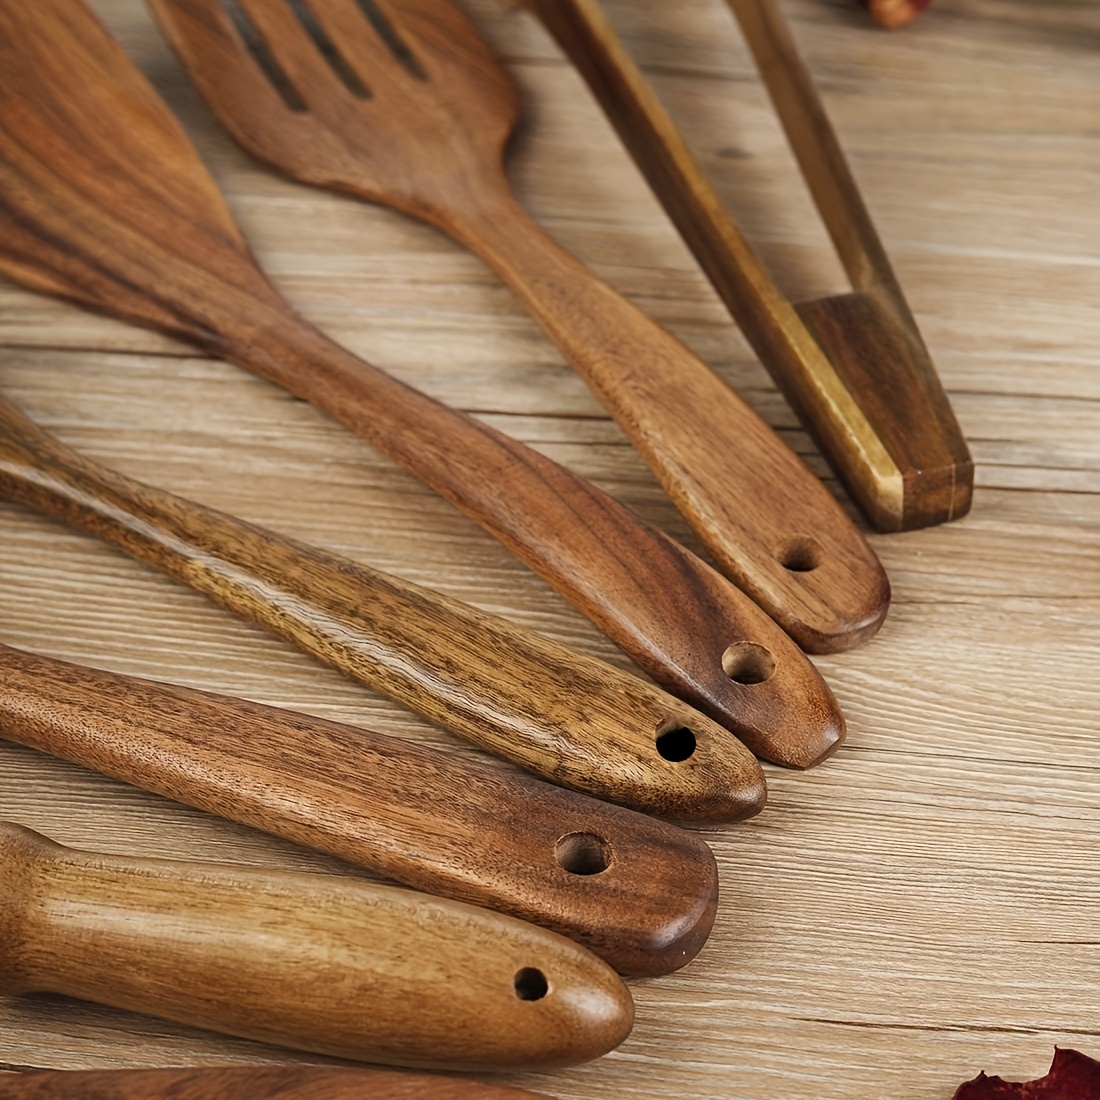 Cucharas de madera para cocinar, juego de 10 utensilios de cocina de madera  de teca natural, utensilios de madera para cocinar, espátulas de madera